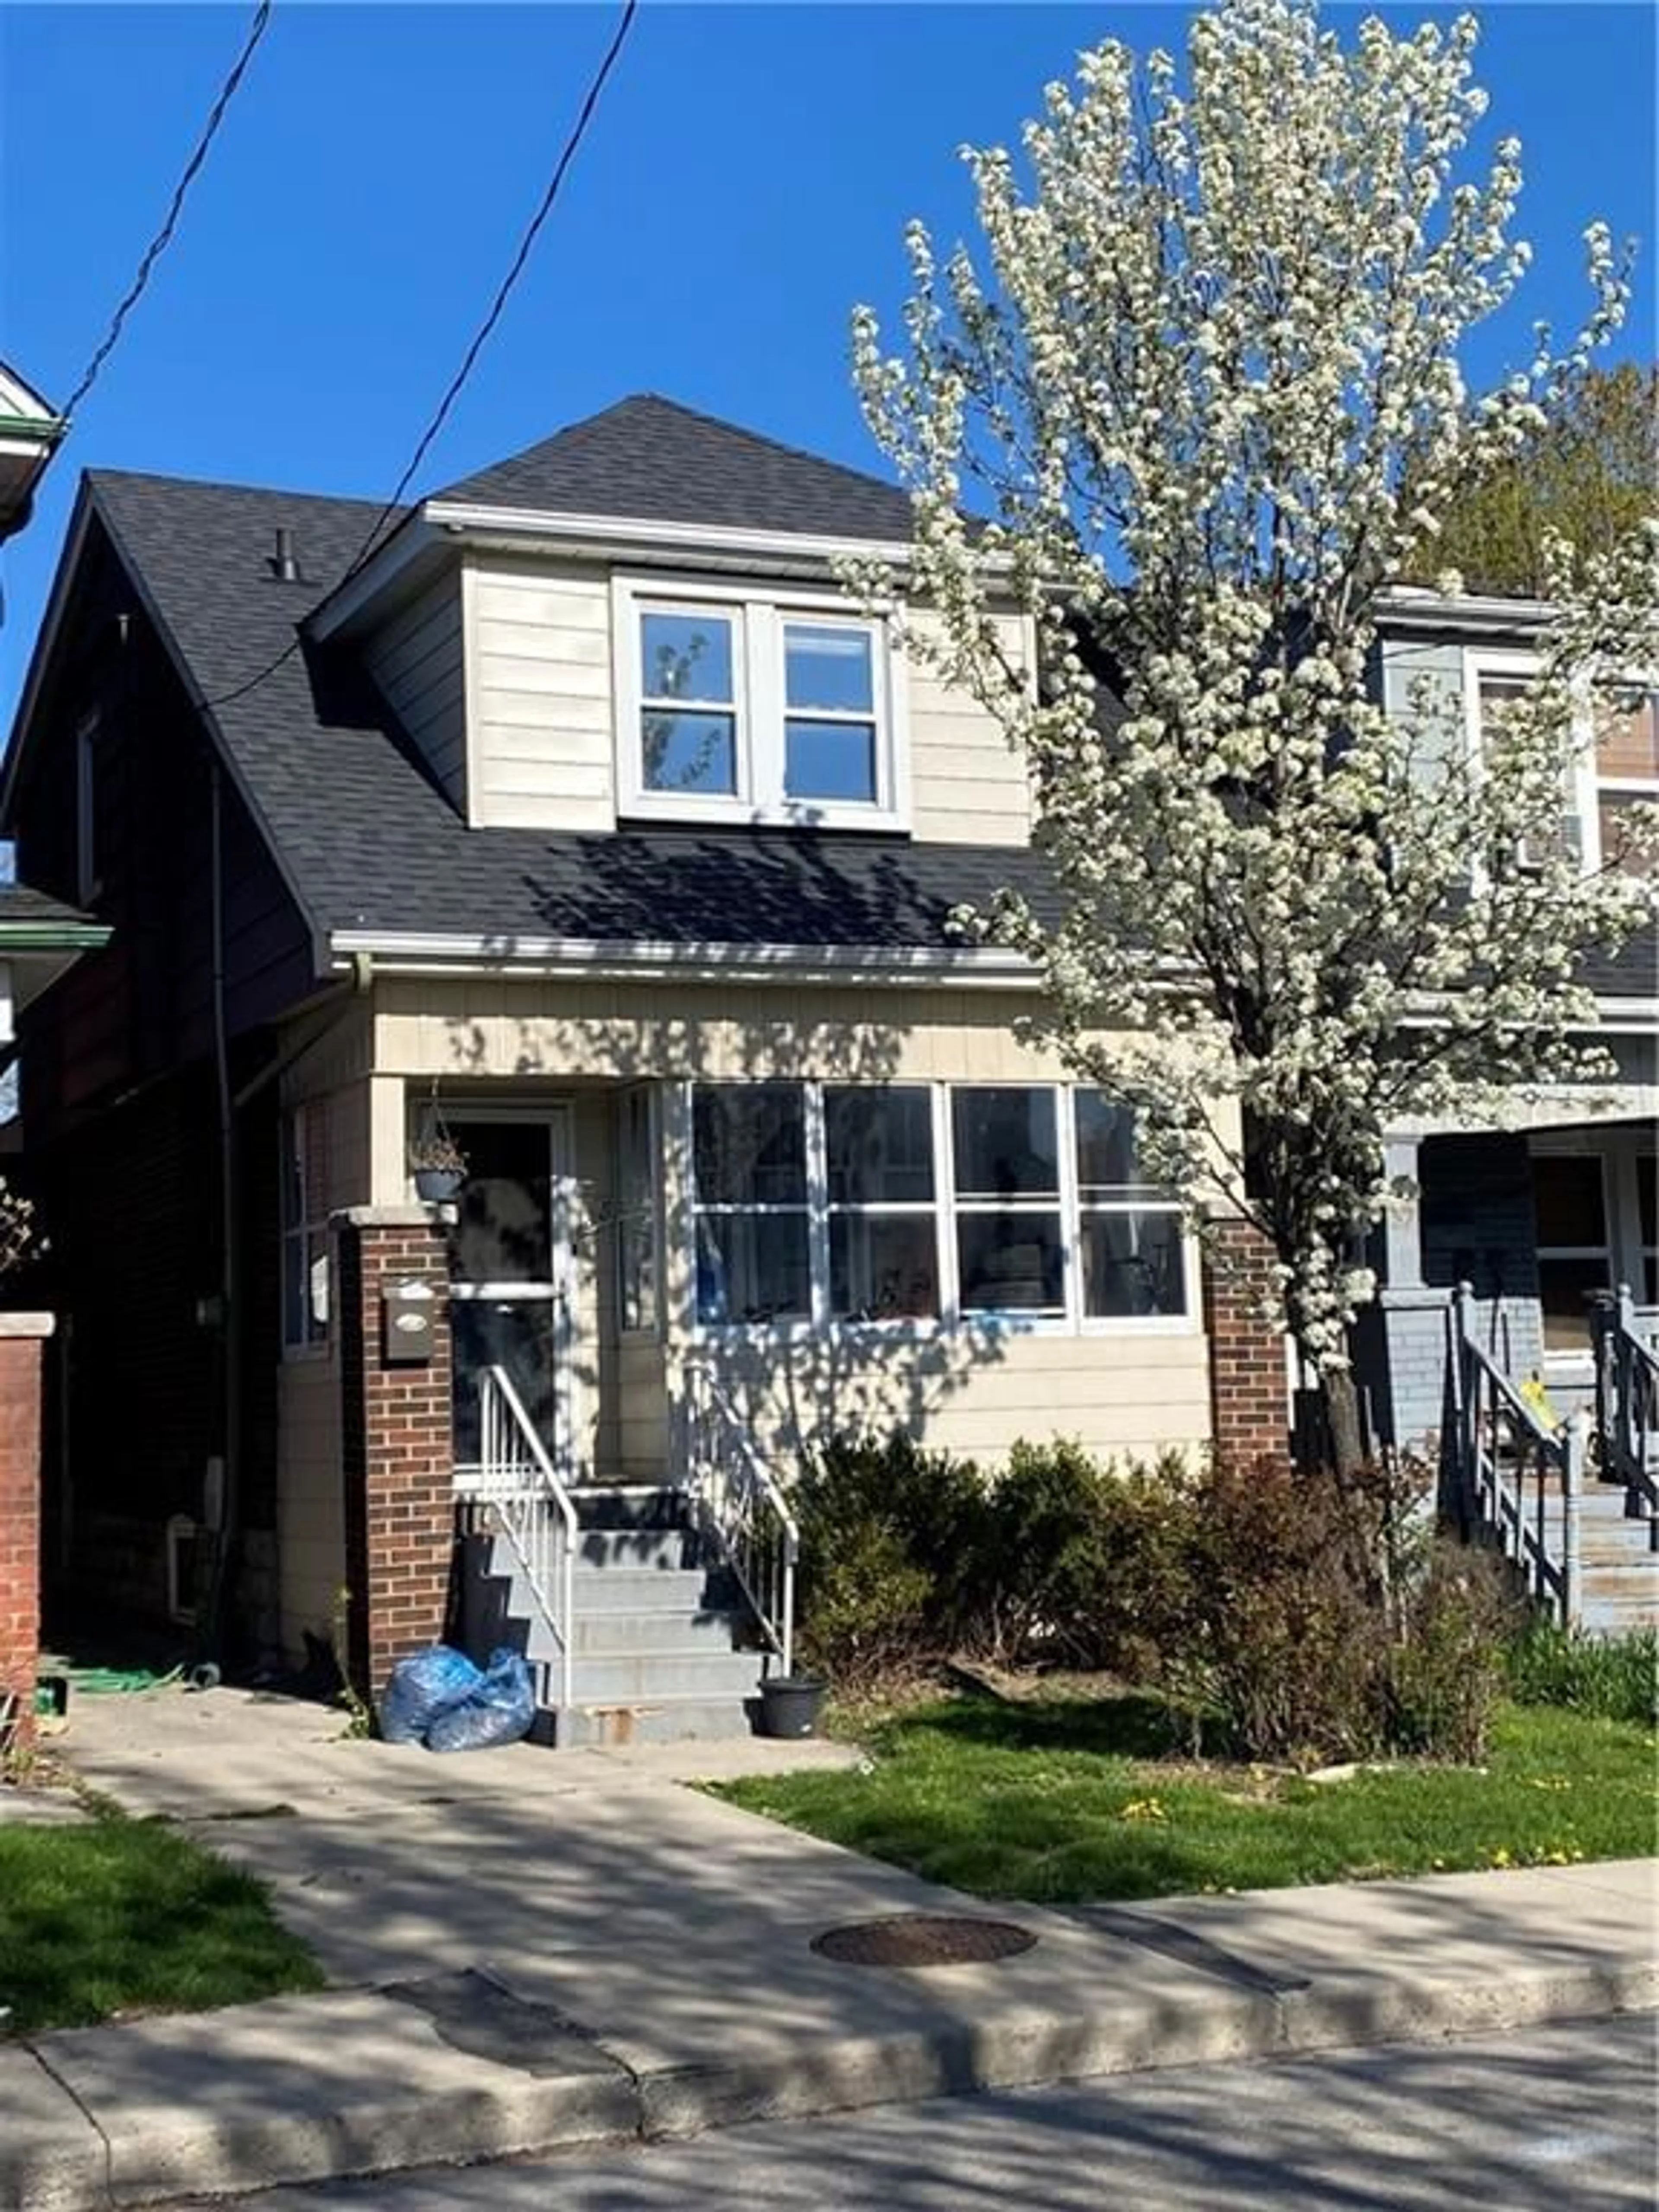 Home with brick exterior material for 35 EDGEMONT St, Hamilton Ontario L8H 4C7